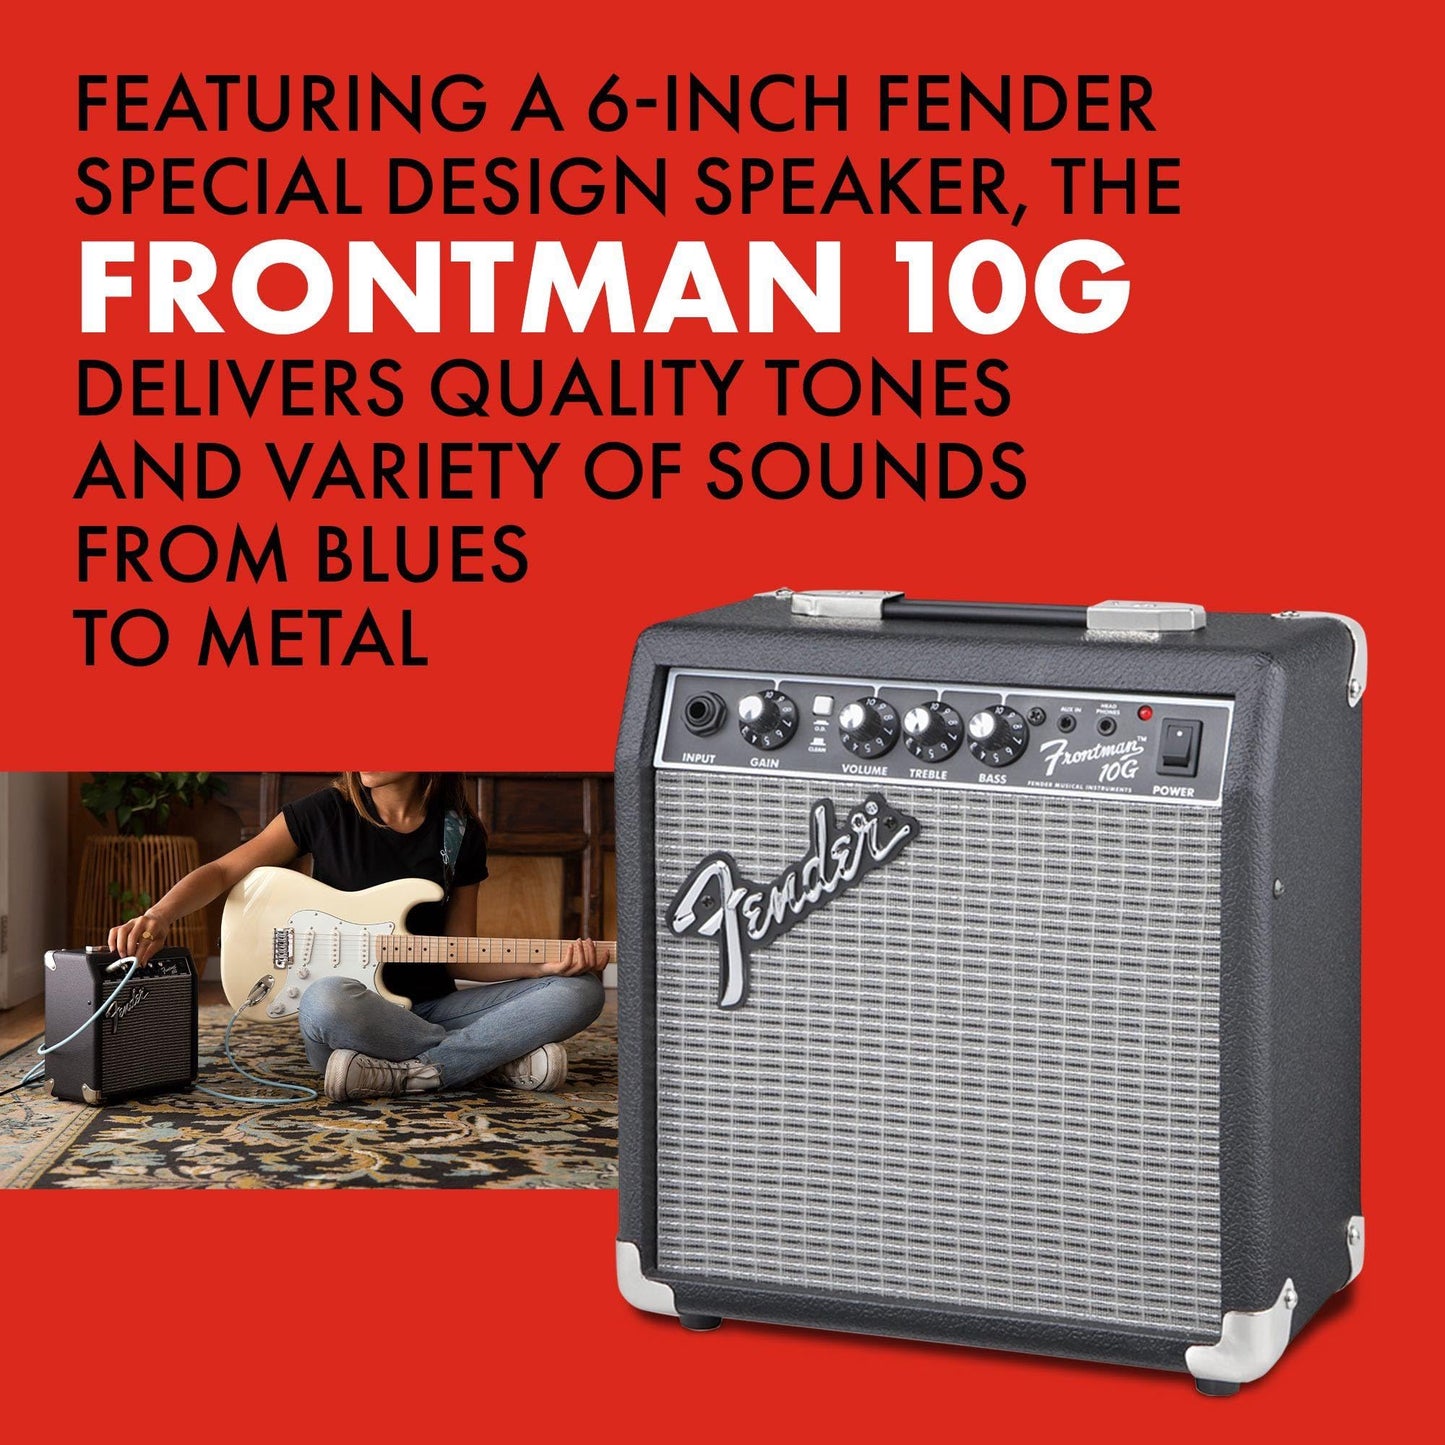 Fender Frontman 10G Guitar Amp, 10 Watts, with 2-Year Warranty, 6 Inch Fender Special Design Speaker, 5.75Dx10.25Wx11H Inches